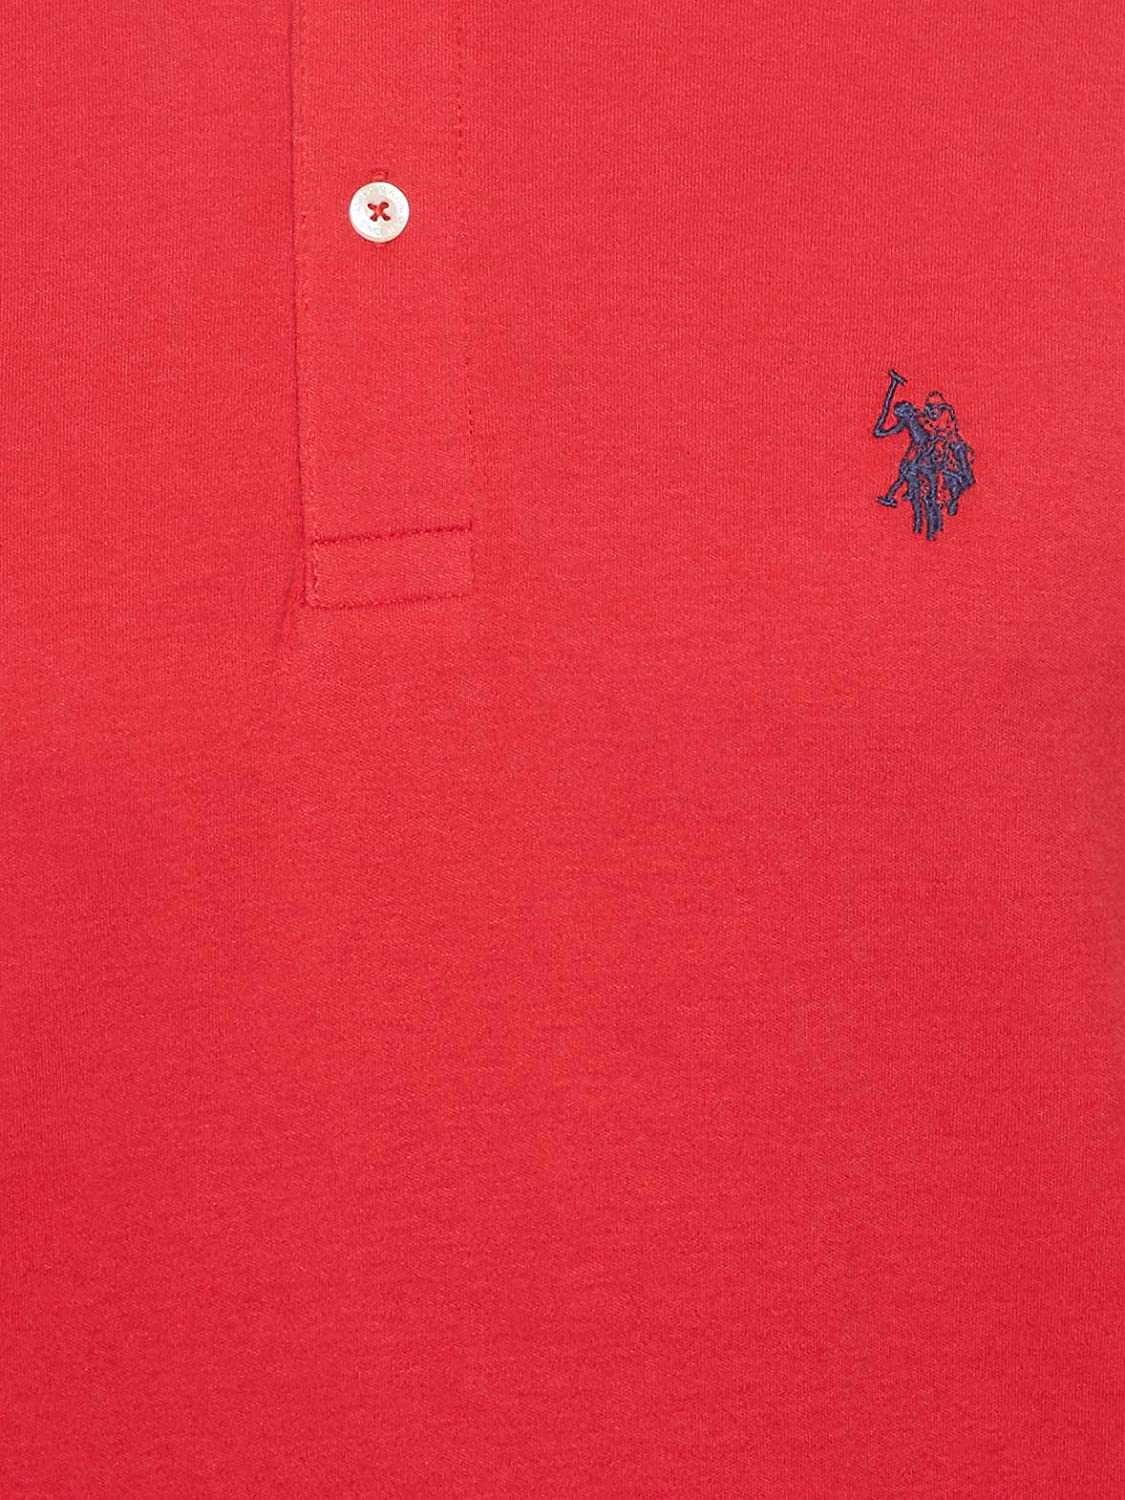 U.s. Polo Assn. Mens Interlock Polo T-Shirt - image 5 of 7